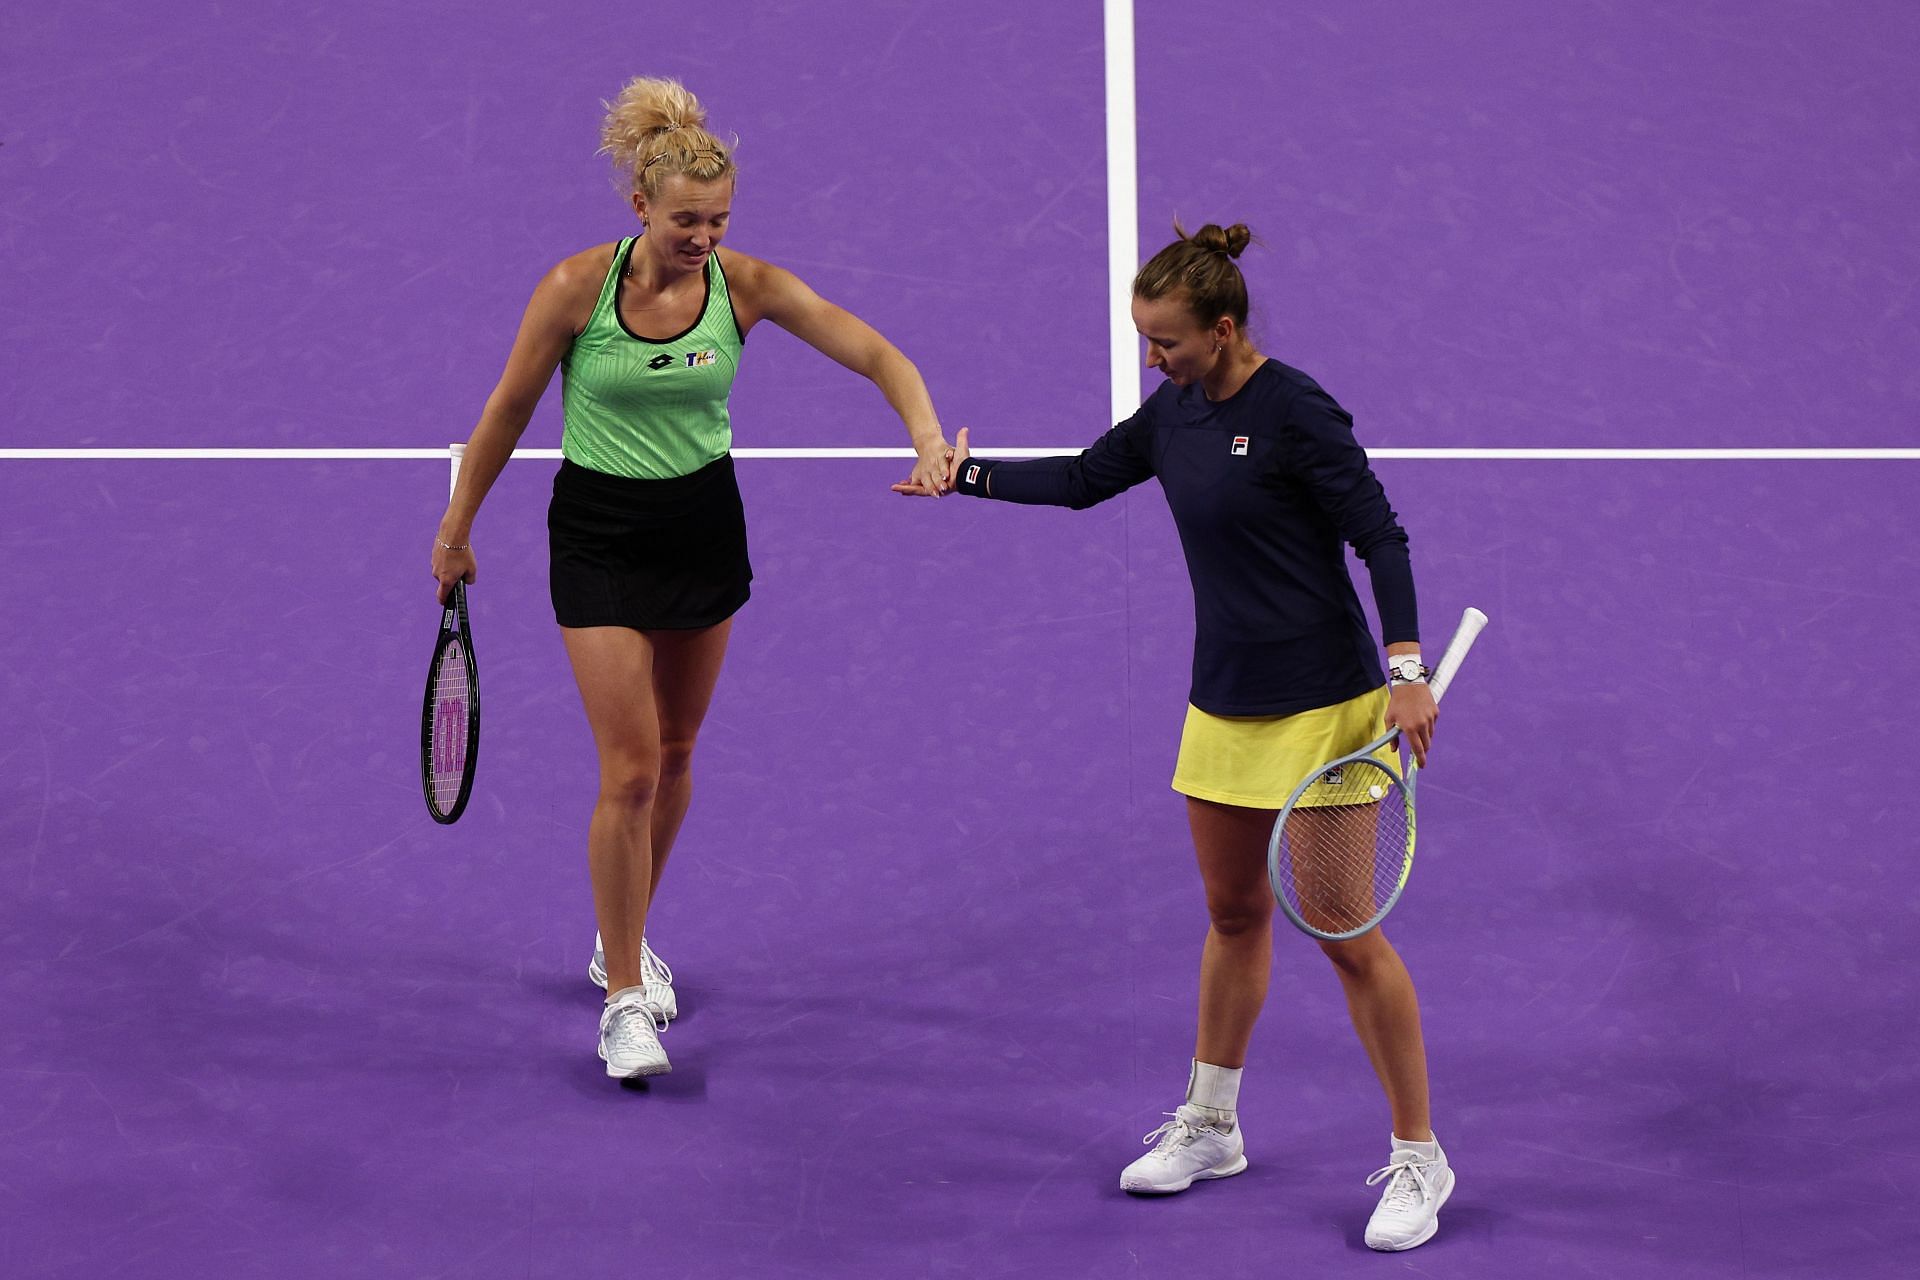 Barbora Krejcikova and Katerina Siniakova are already in the semifinals